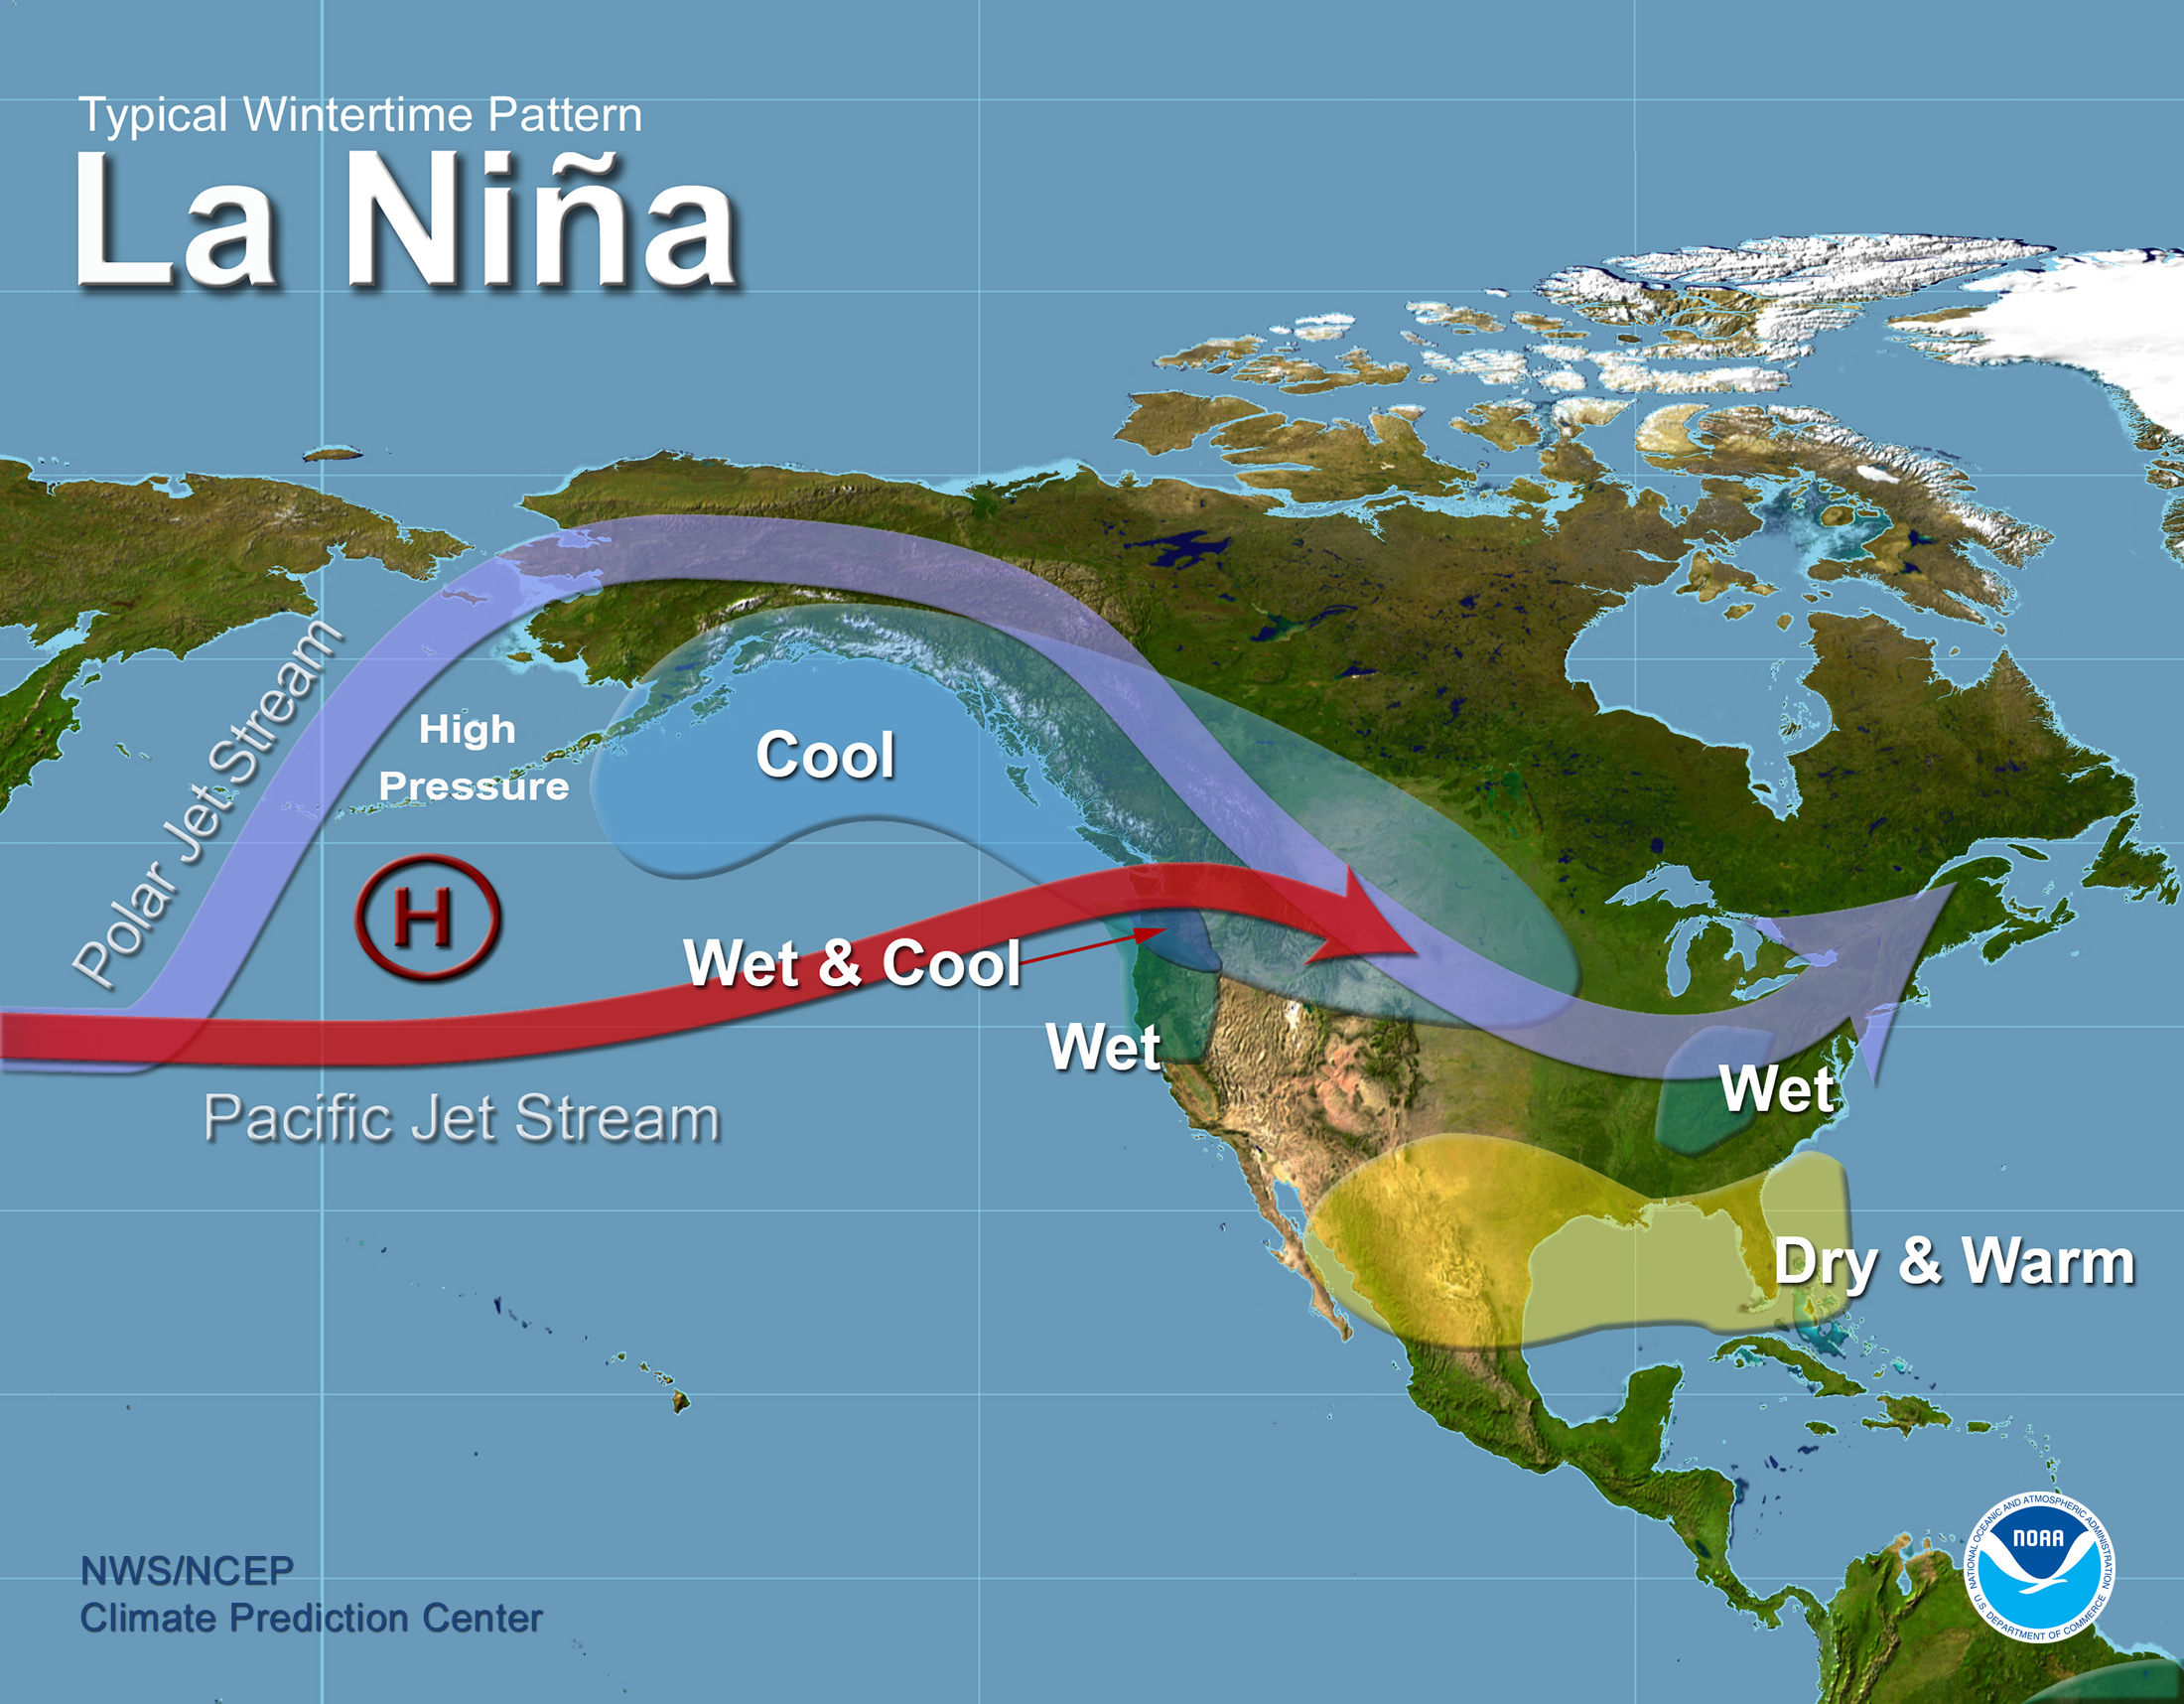 La Nina pattern. image: noaa